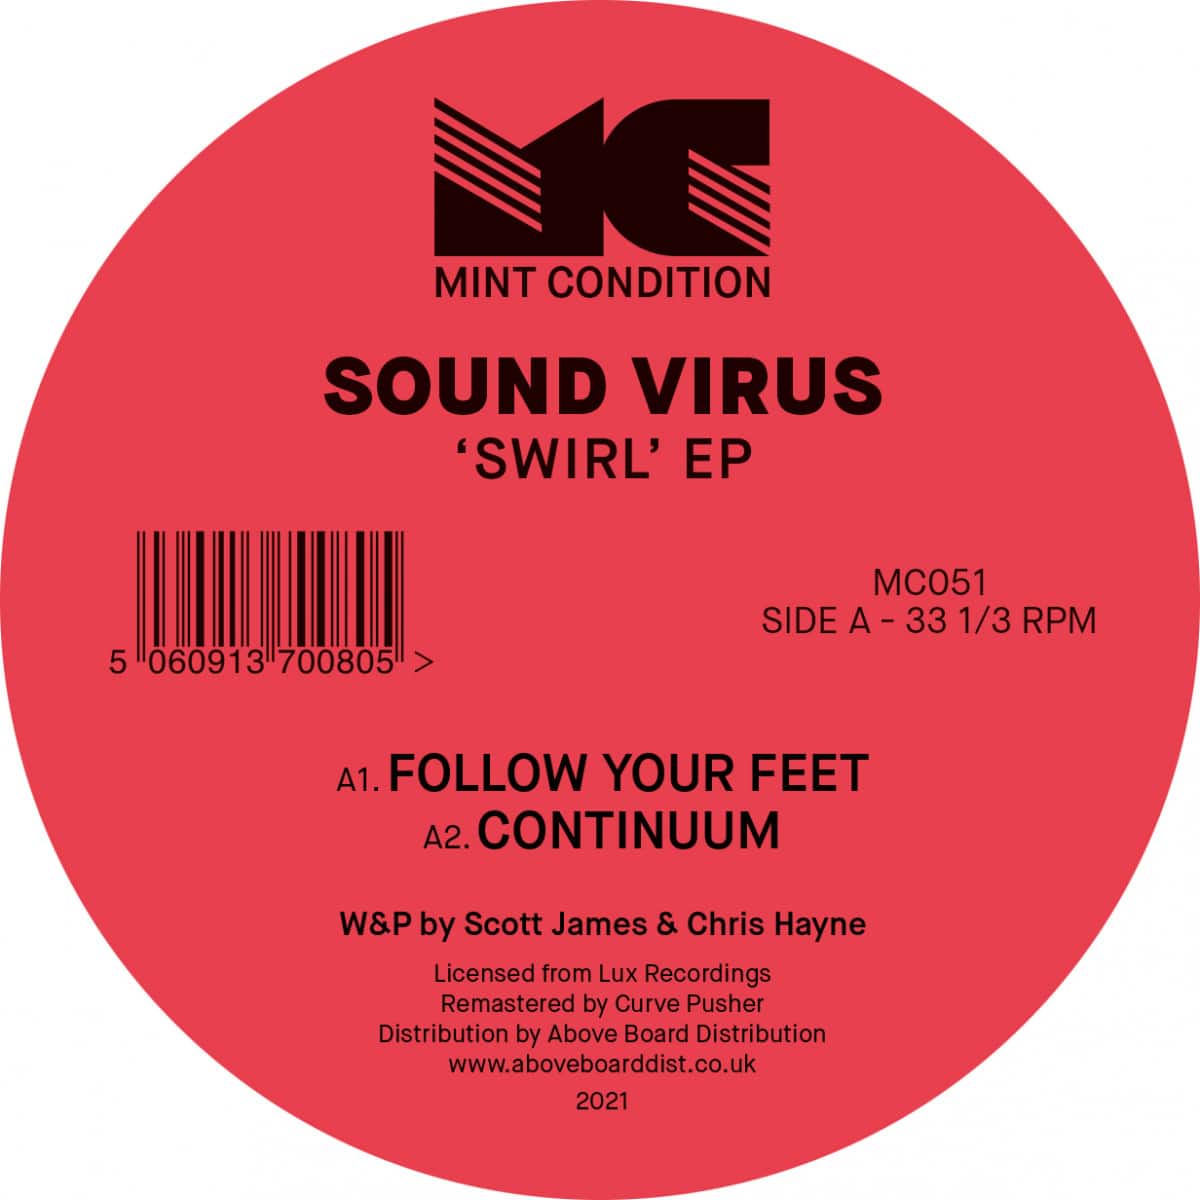 Sound Virus - Swirl EP - MC051 - MINT CONDITION